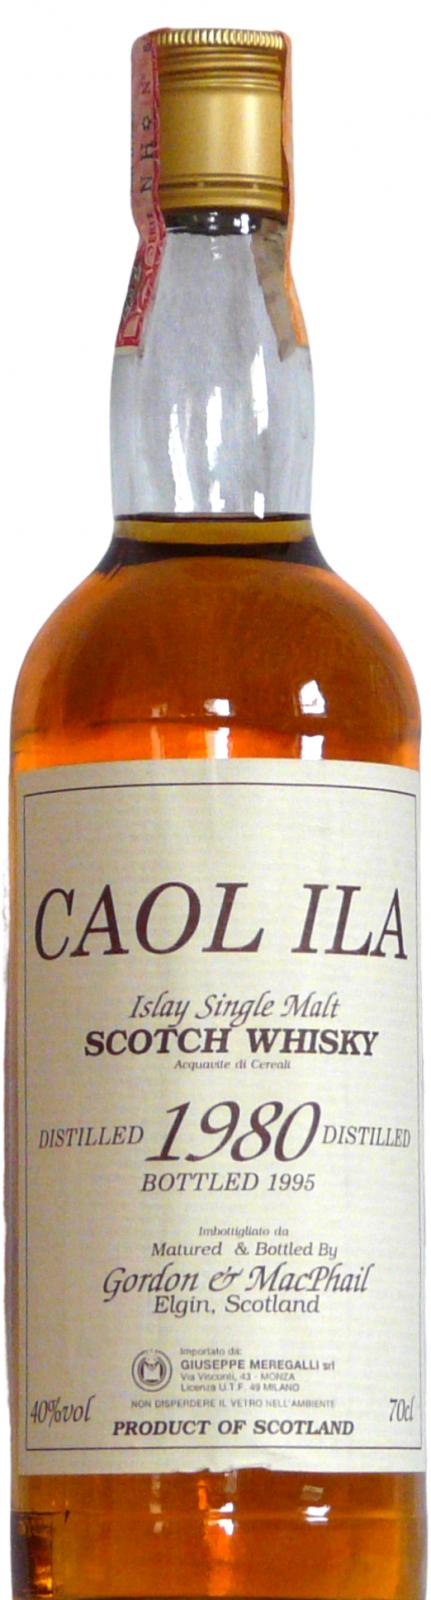 Caol Ila 1980 GM Islay Single Malt Scotch Whisky Giuseppe Meregalli srl 40% 700ml